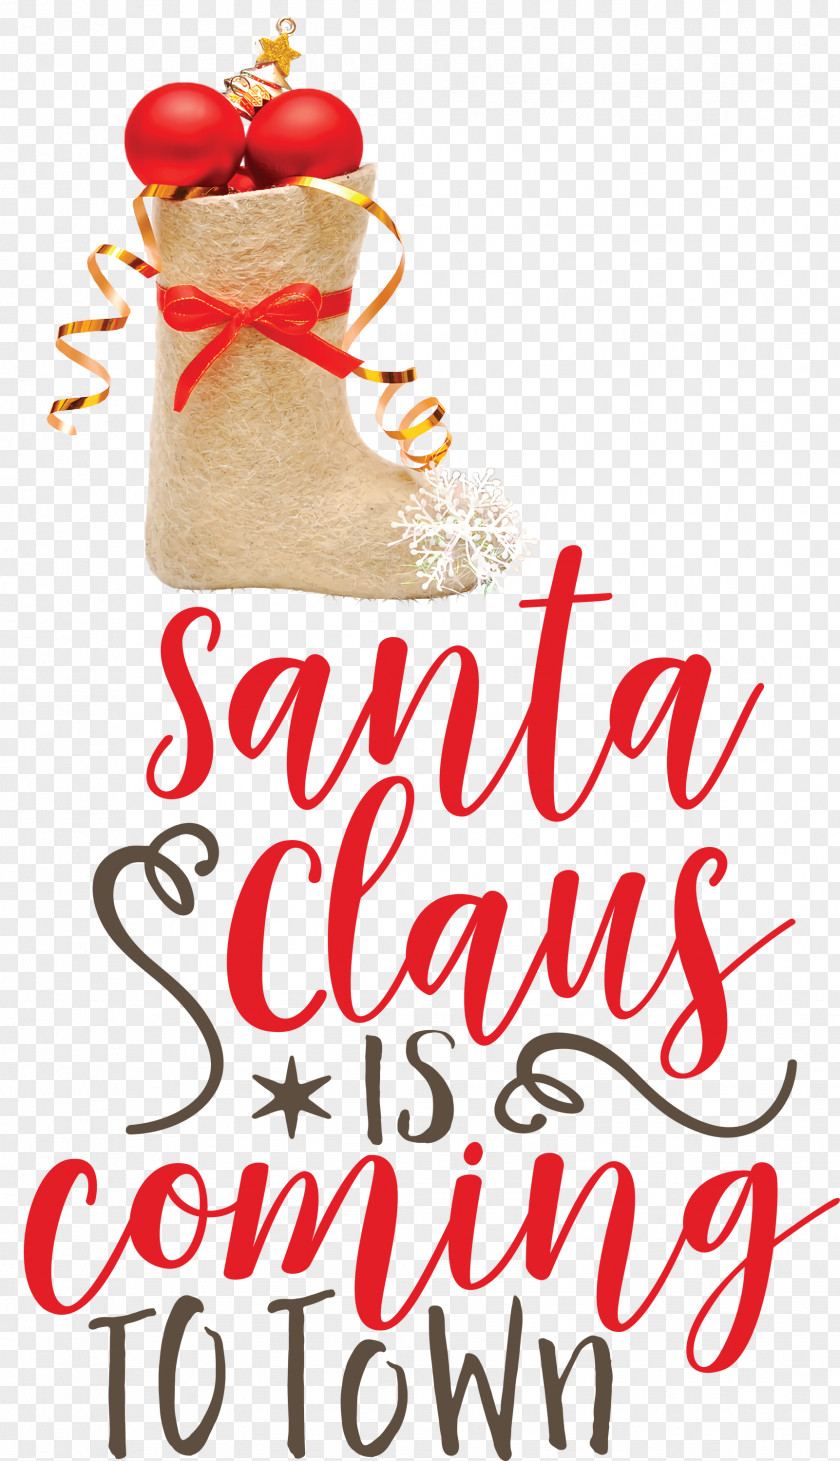 Santa Claus Is Coming Christmas PNG